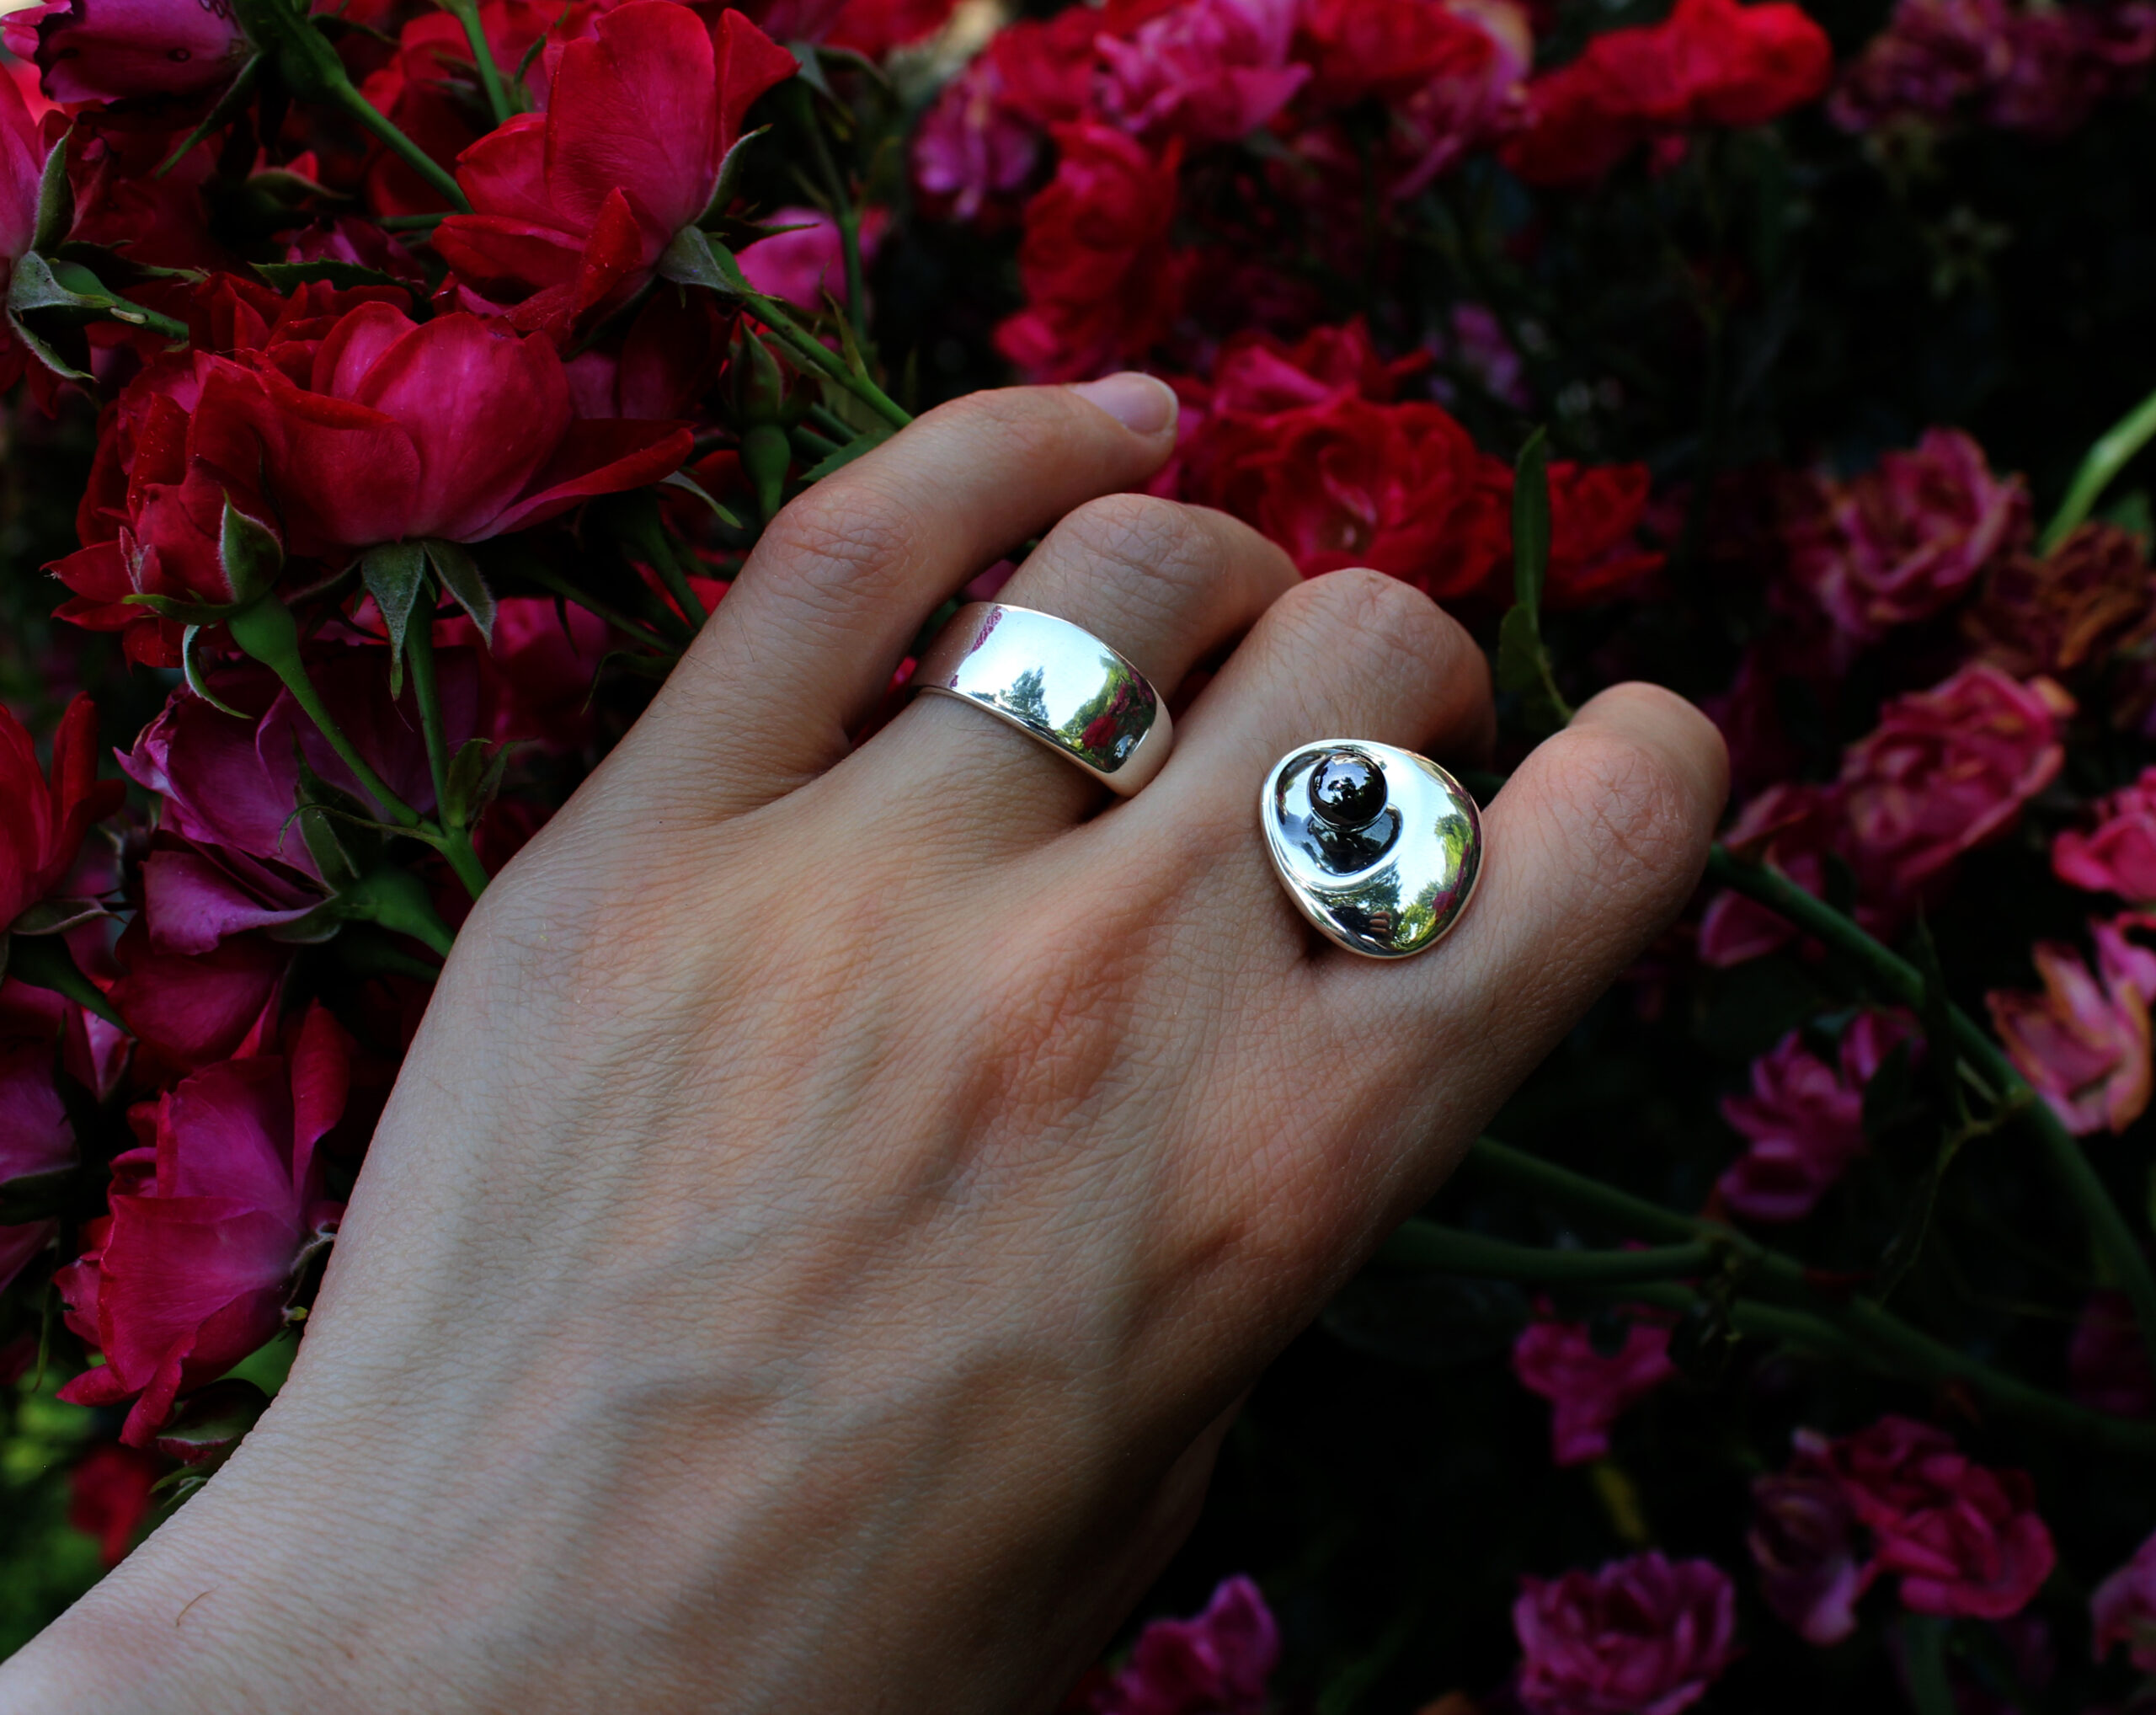 Voroco 925 Sterling Silver Chain Double CZ Open Finger Ring Women Gifts  Jewelry | eBay